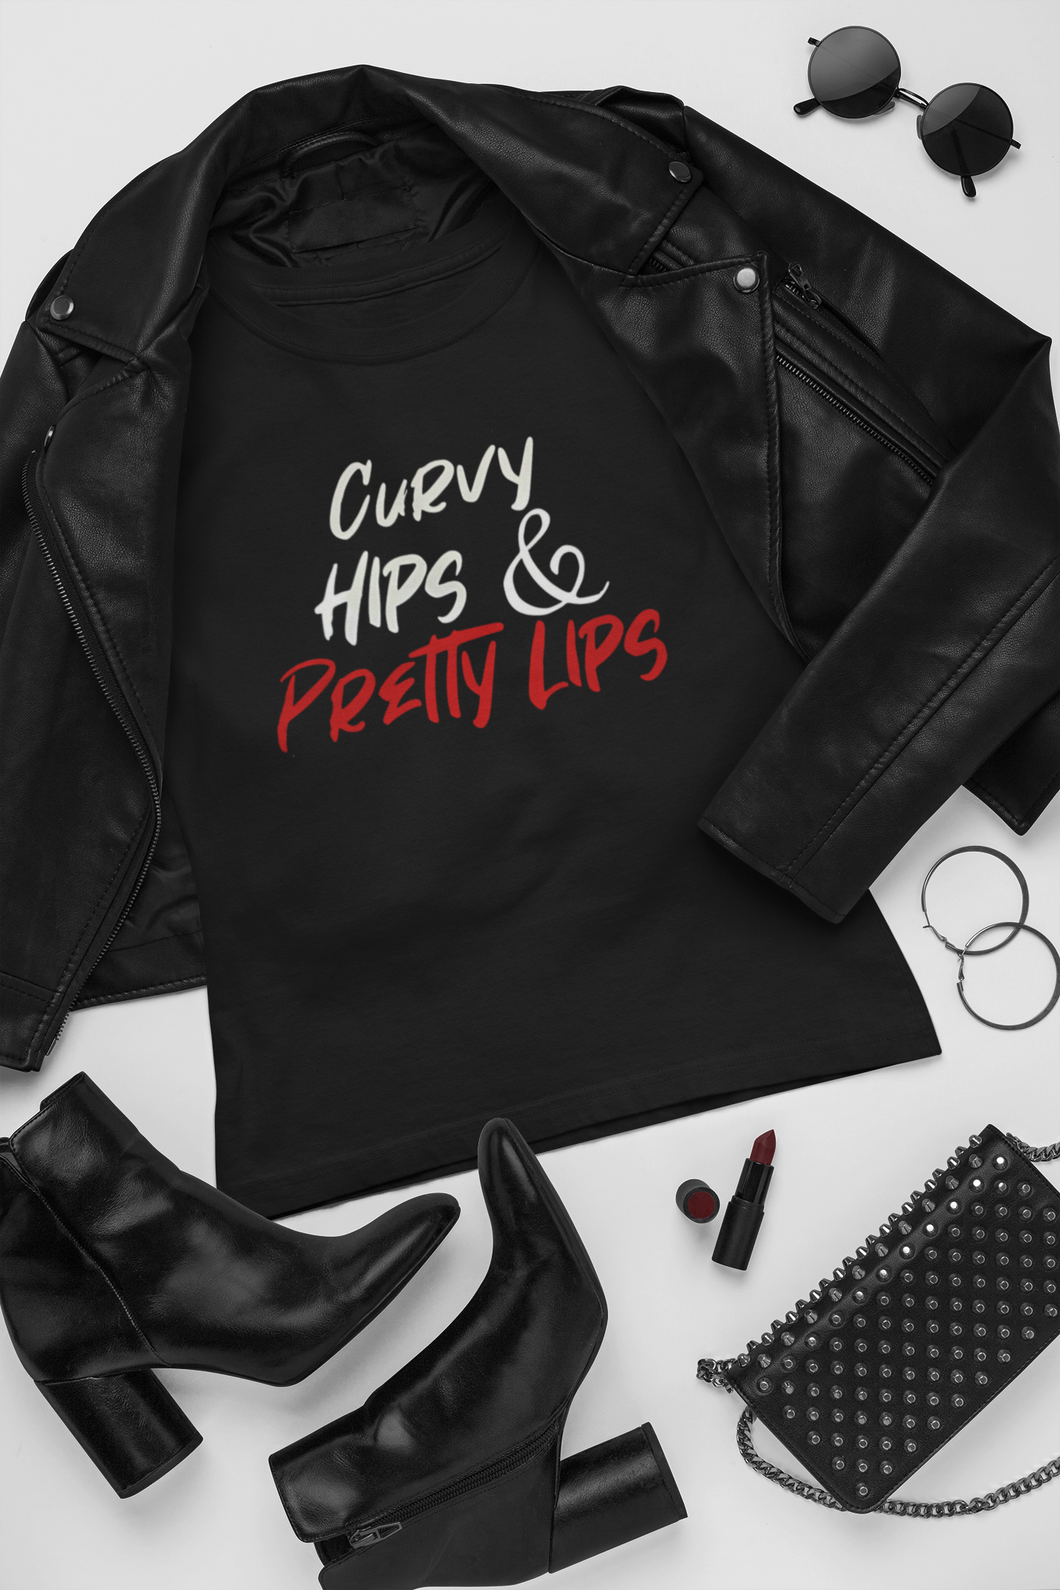 Curvy Hips & Pretty Lips - Vinyl Design